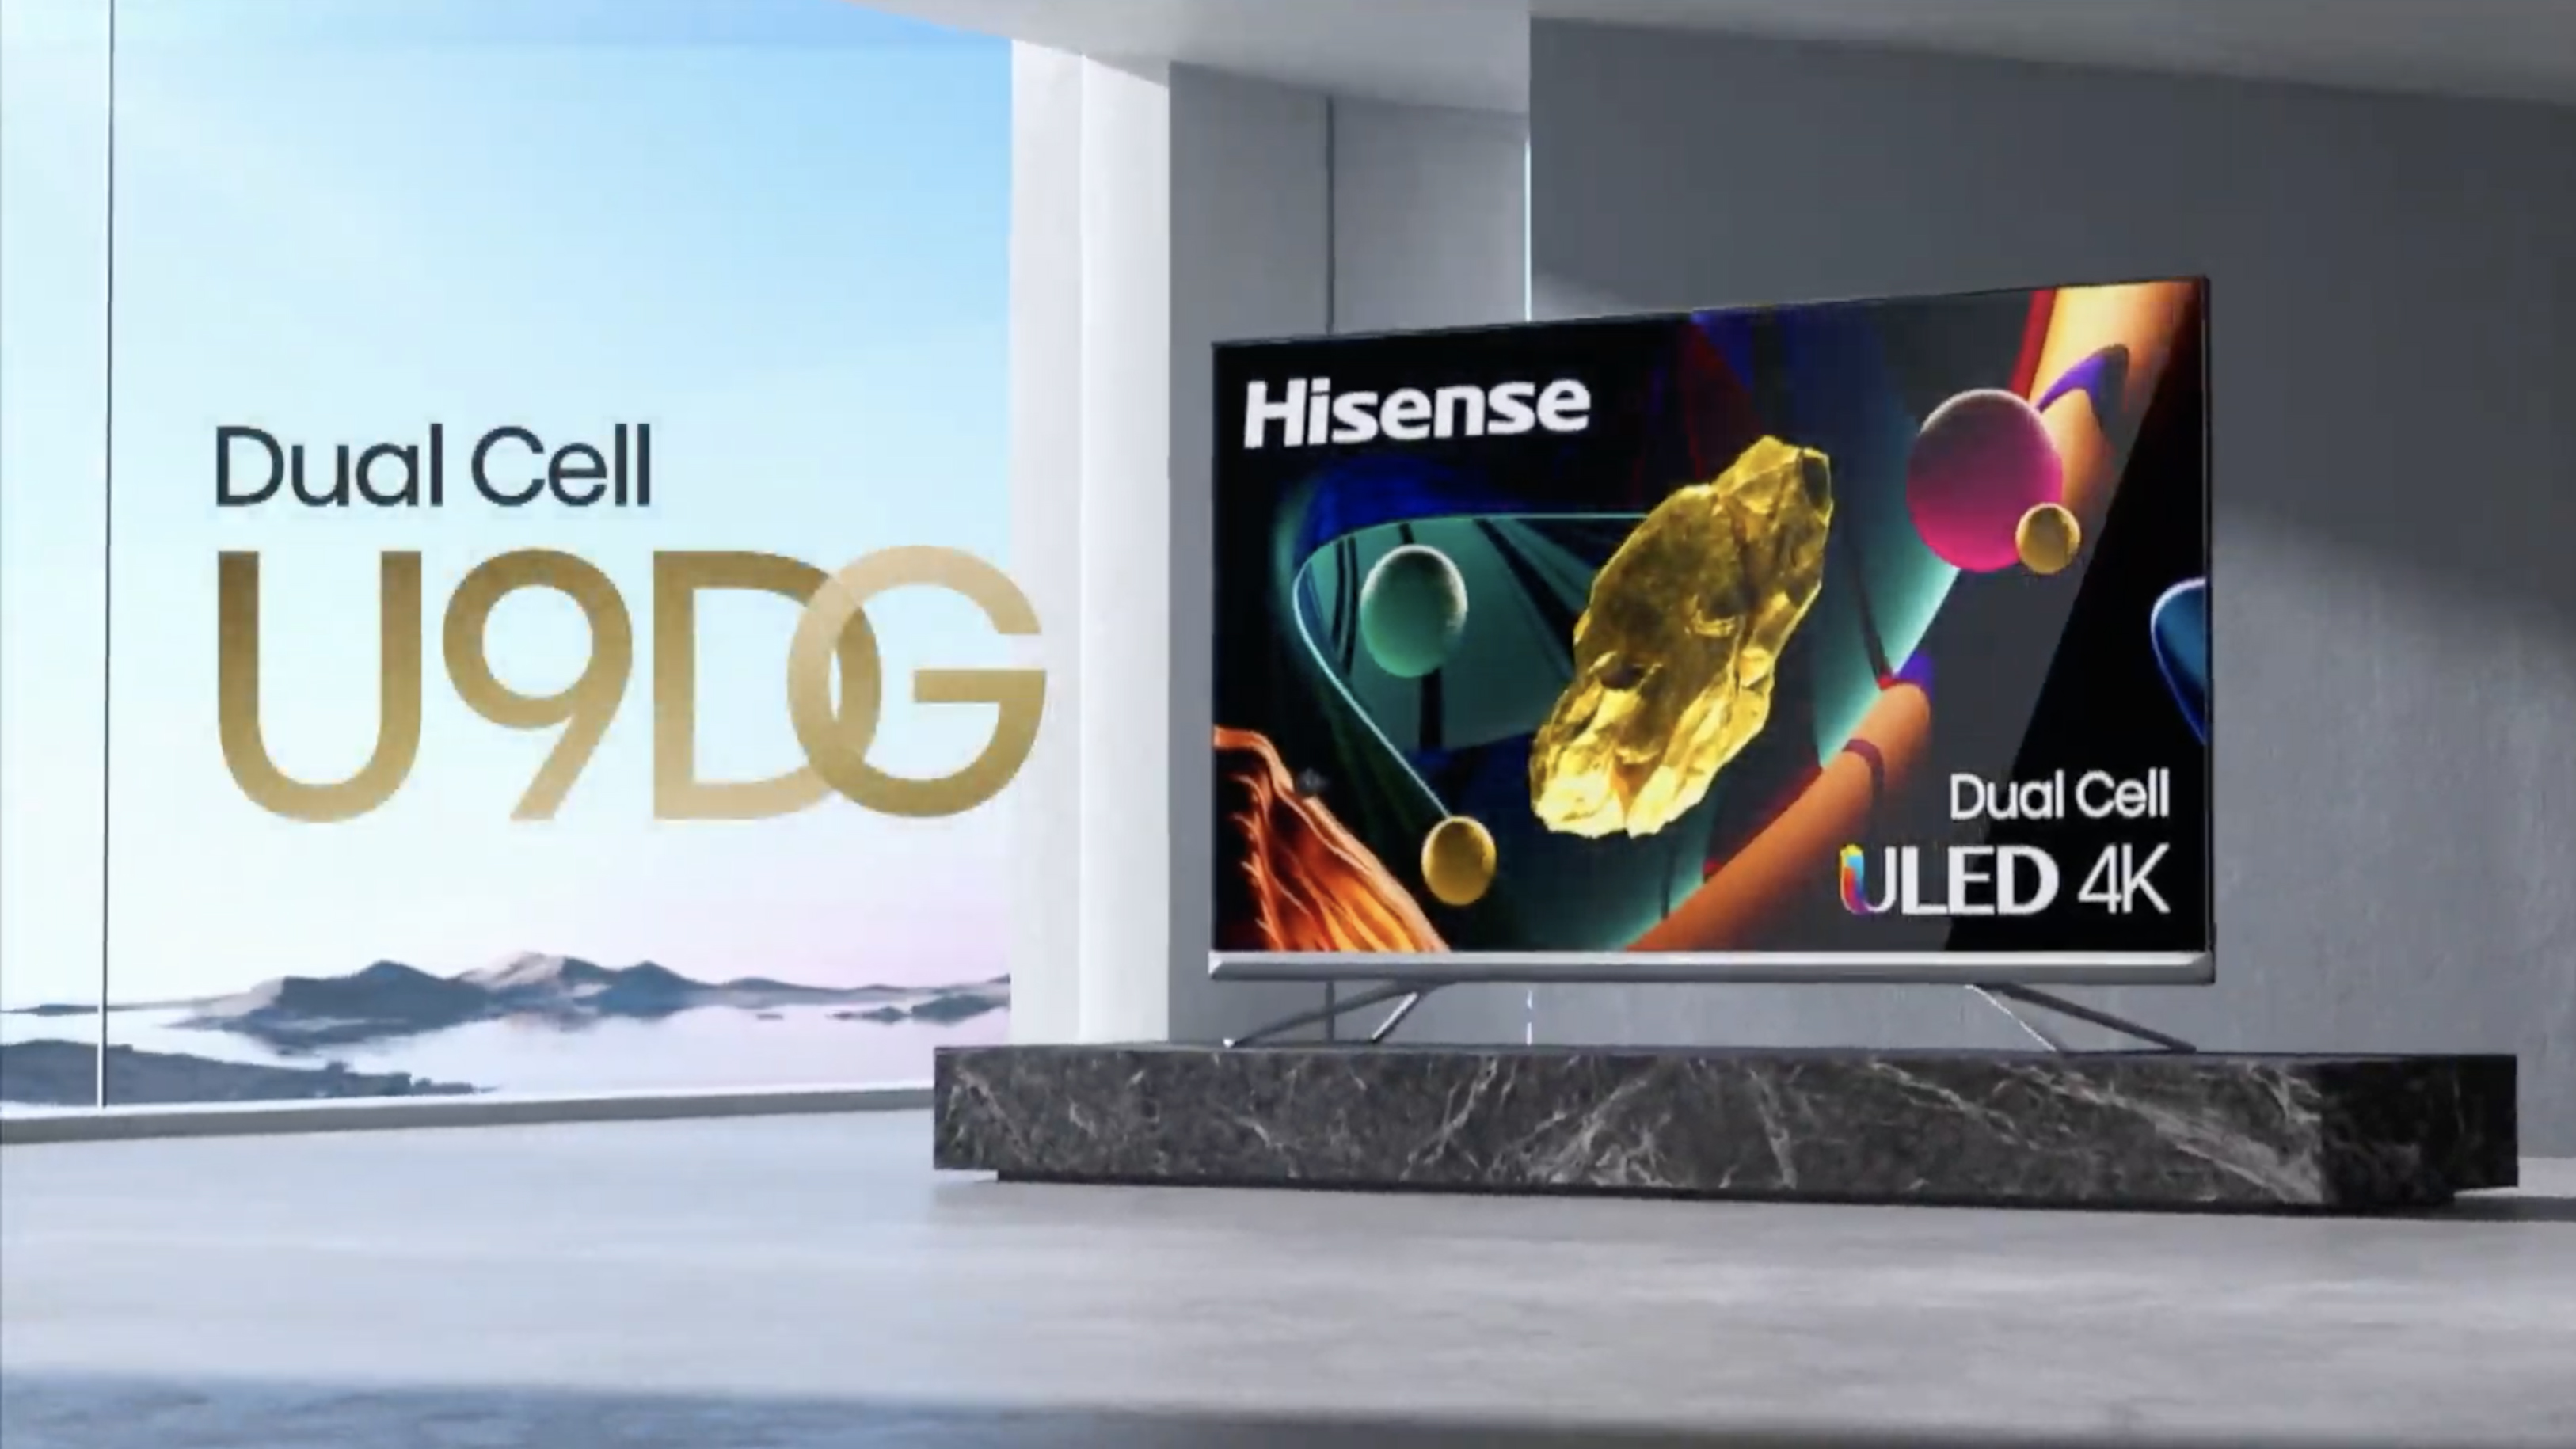 The Hisense U9DG TV hanging in a grey living room